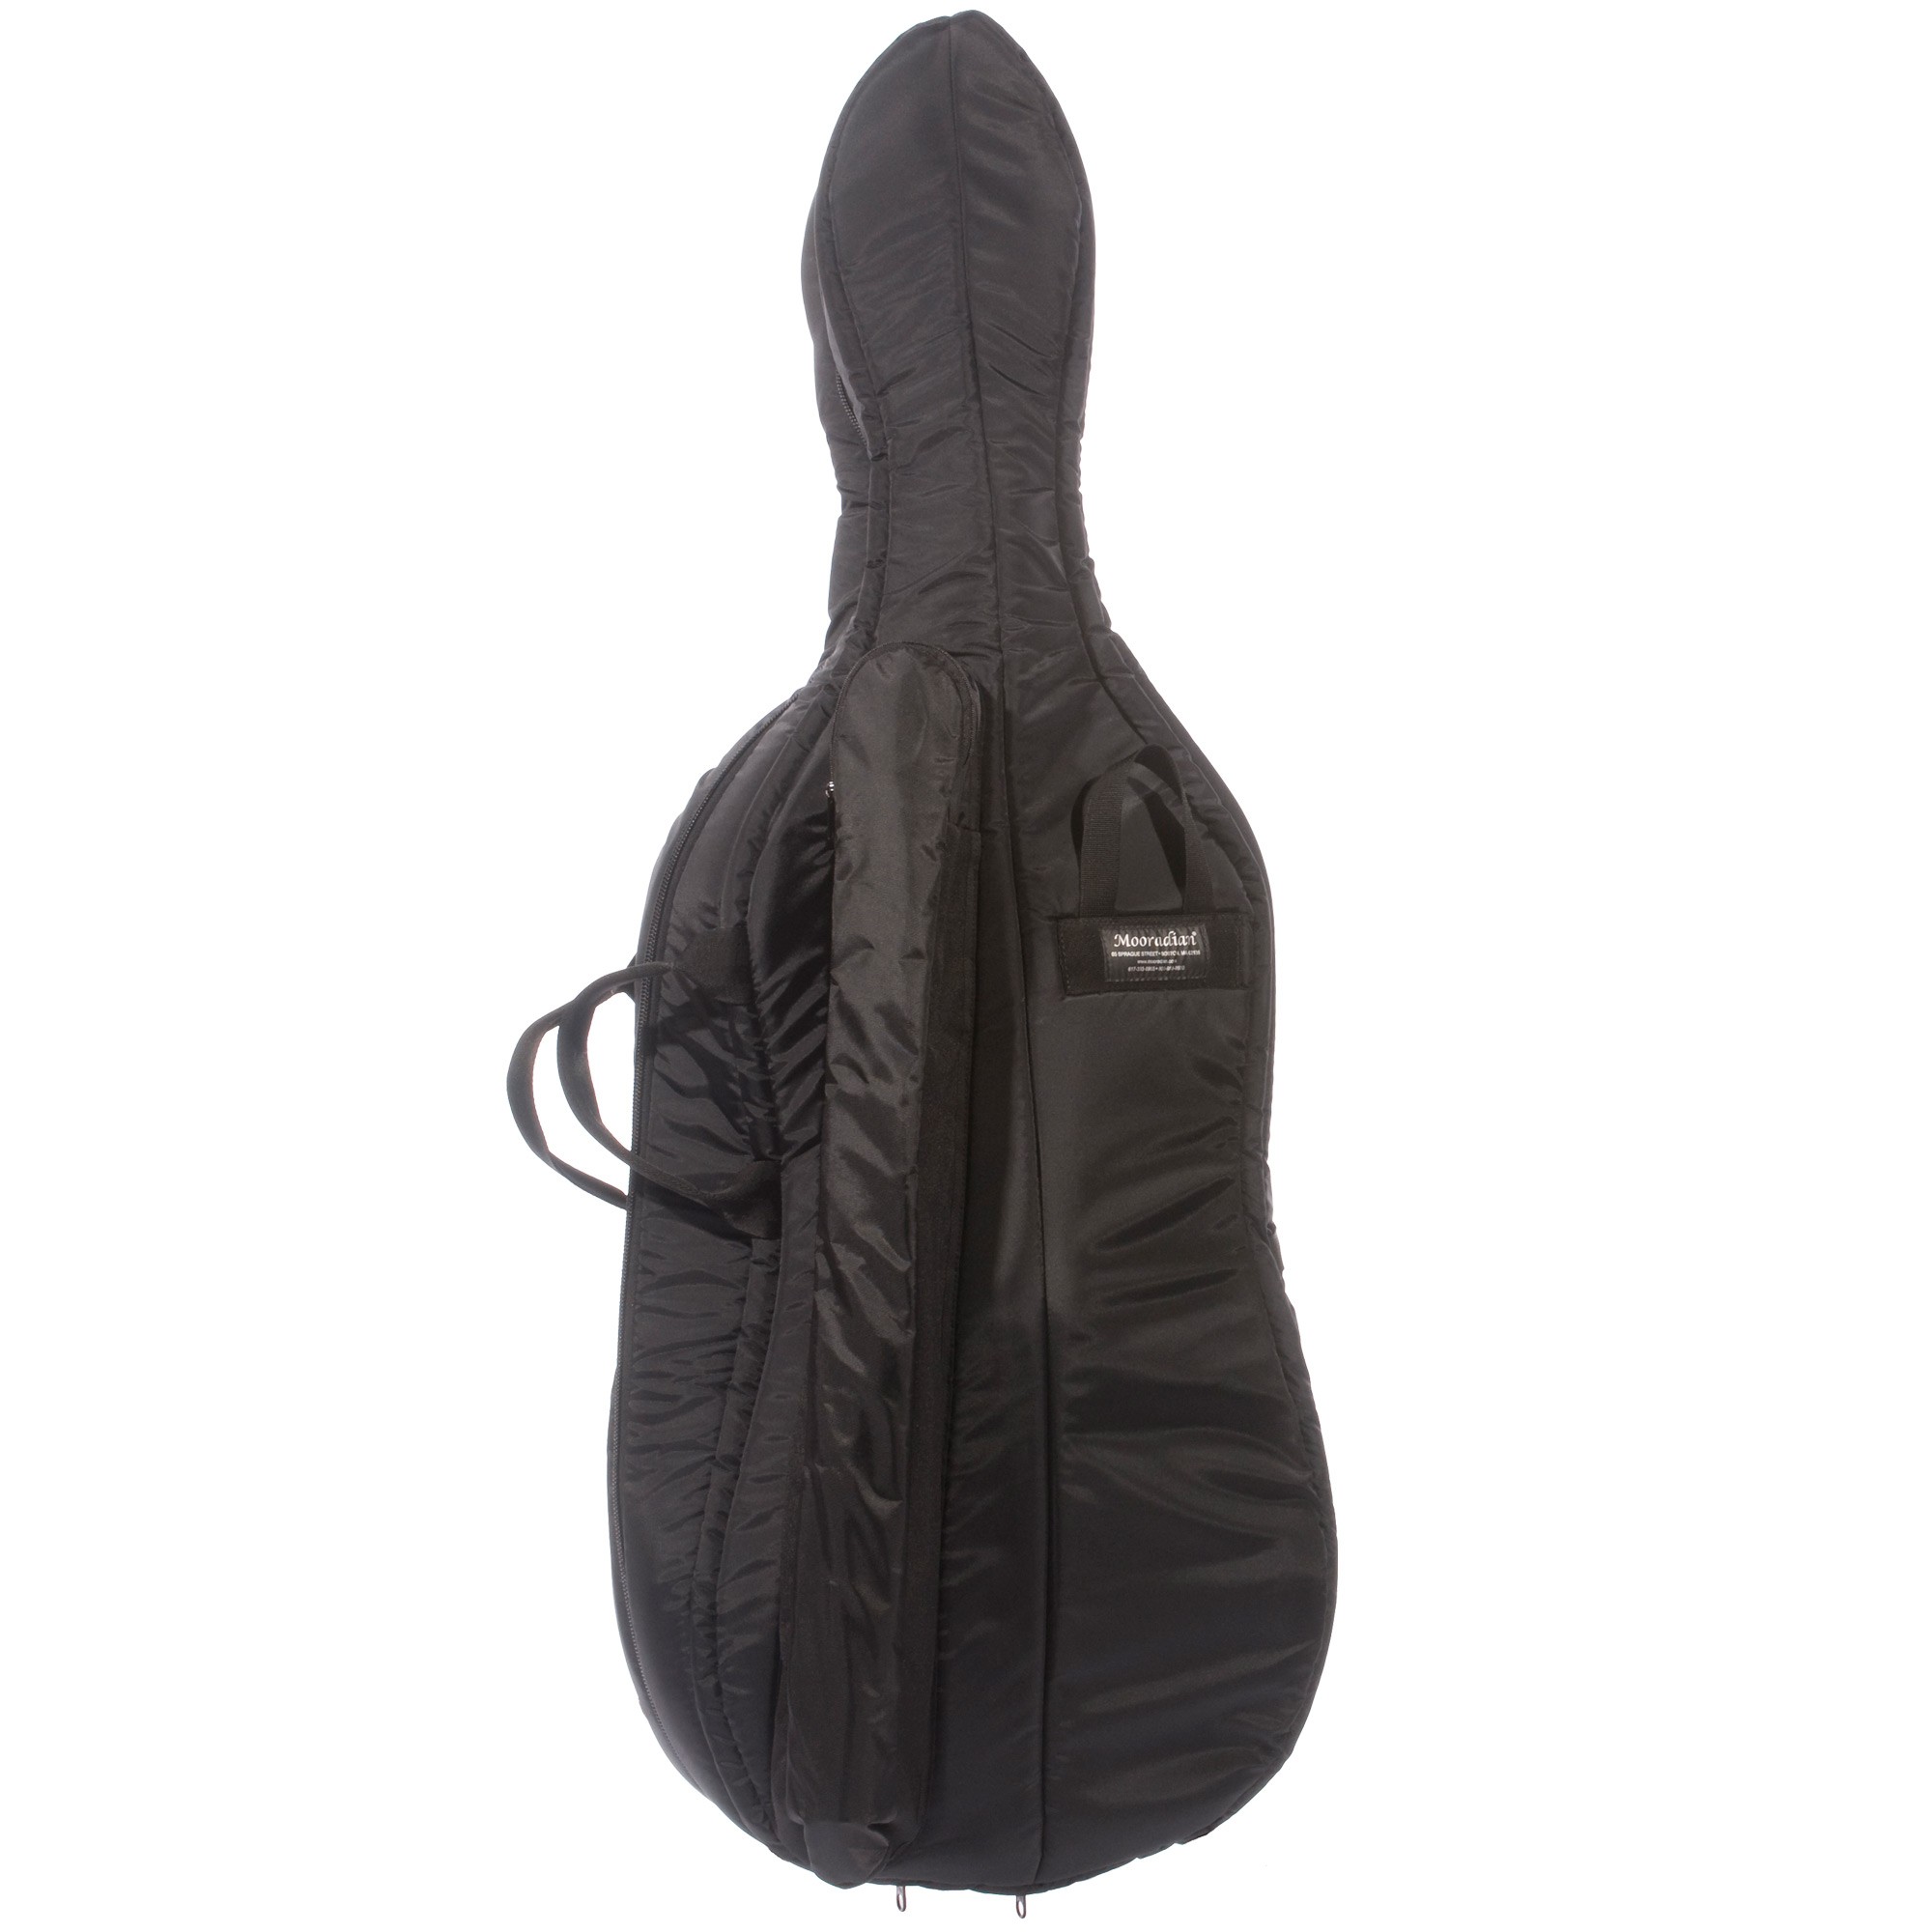 Mooradian Deluxe Padded Bass Bag